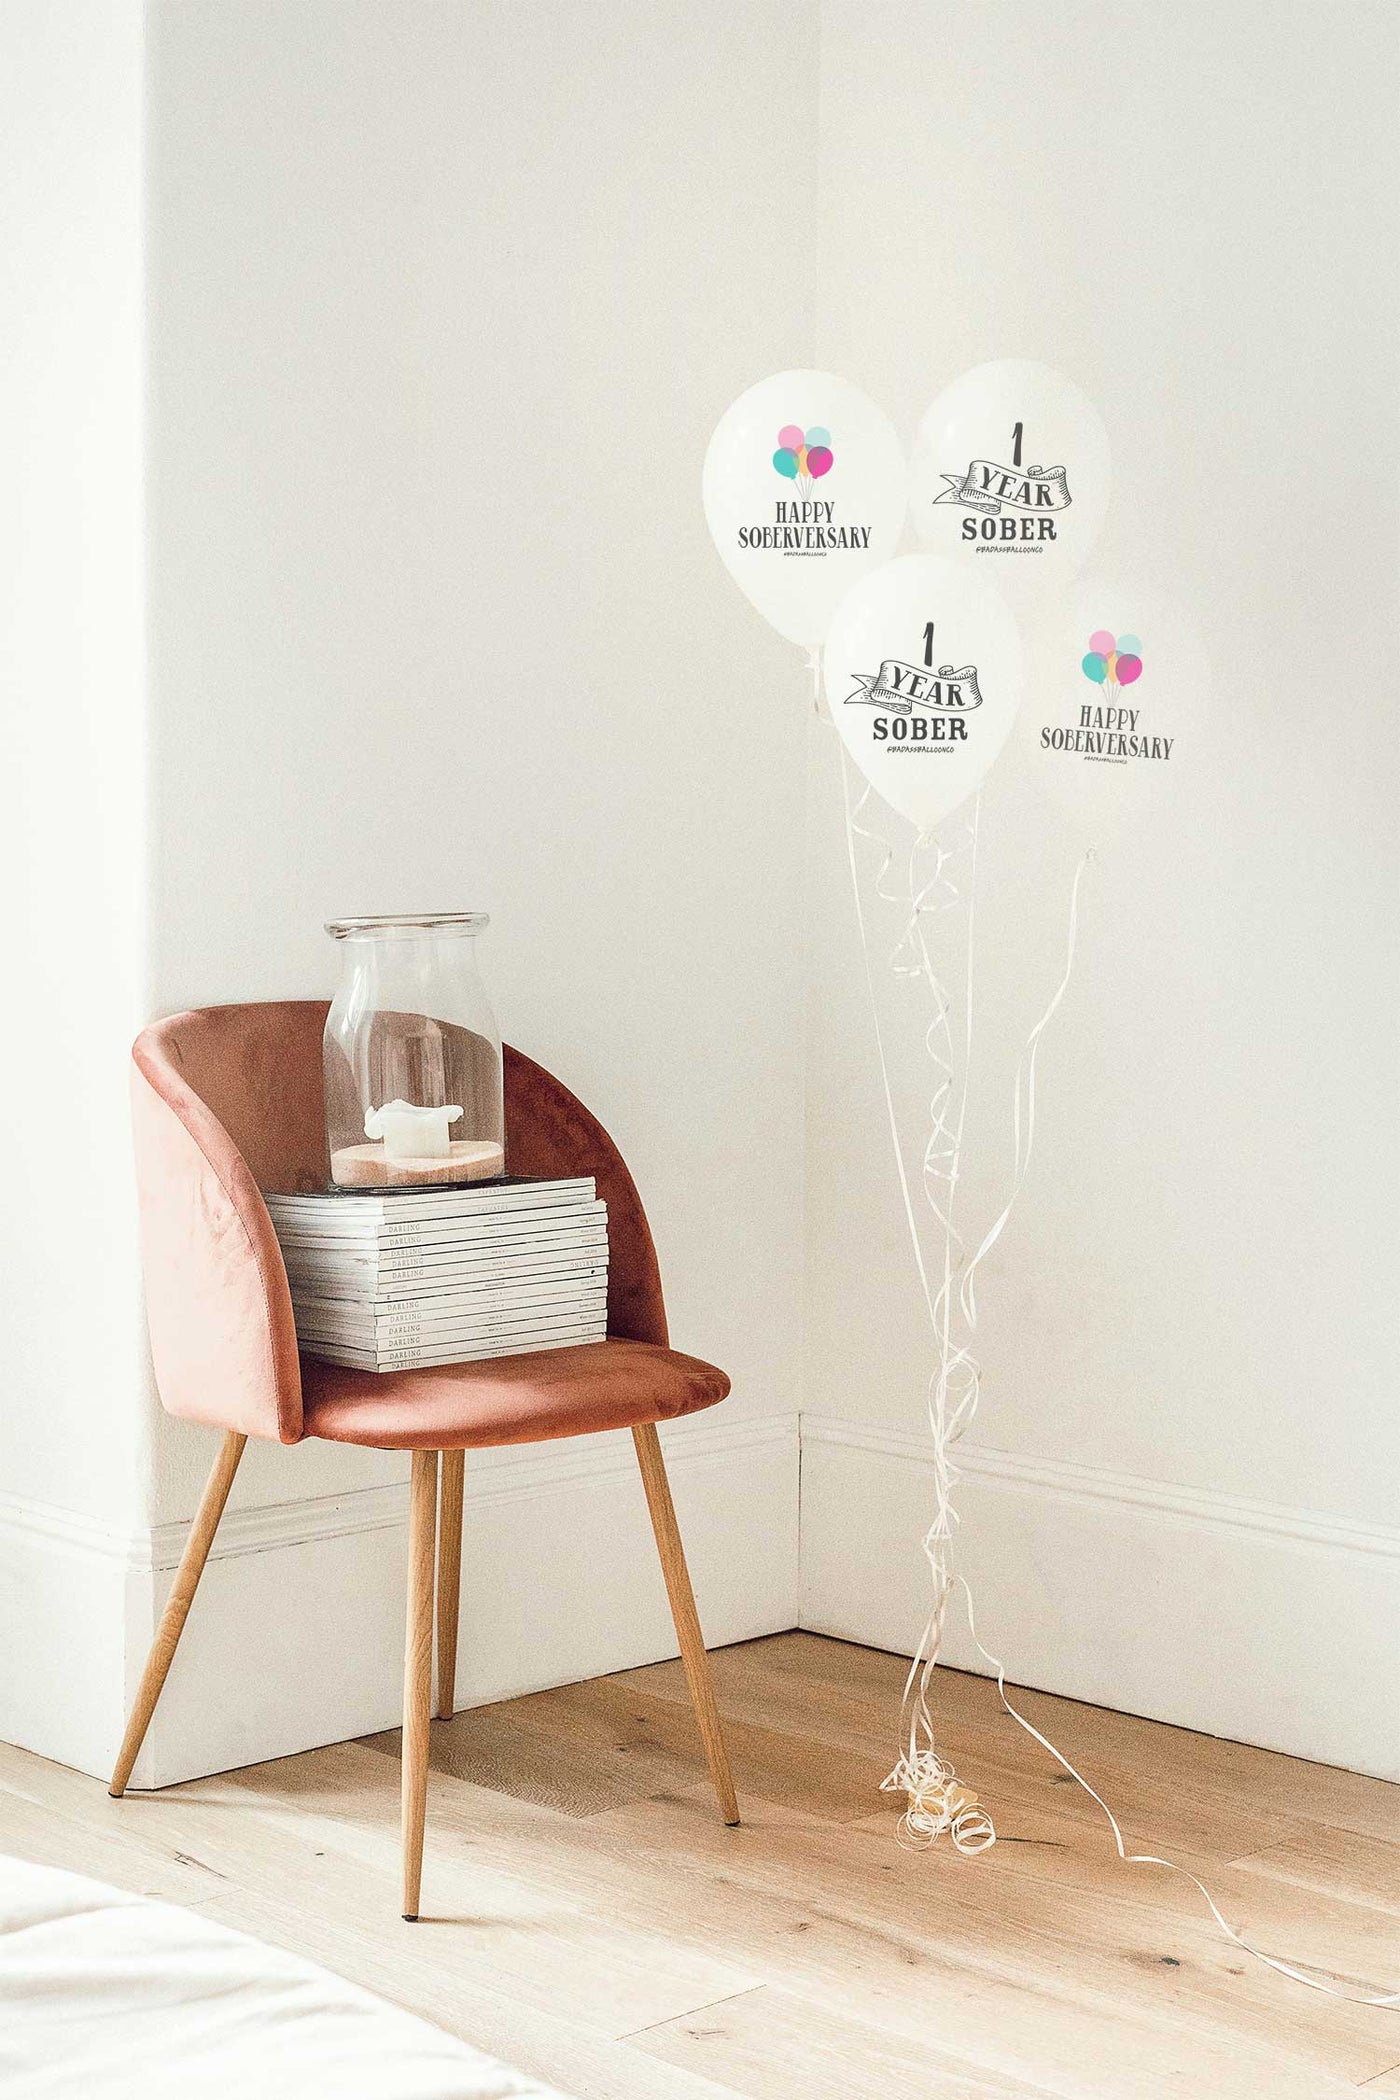 5 years Sober | Soberversary Balloons